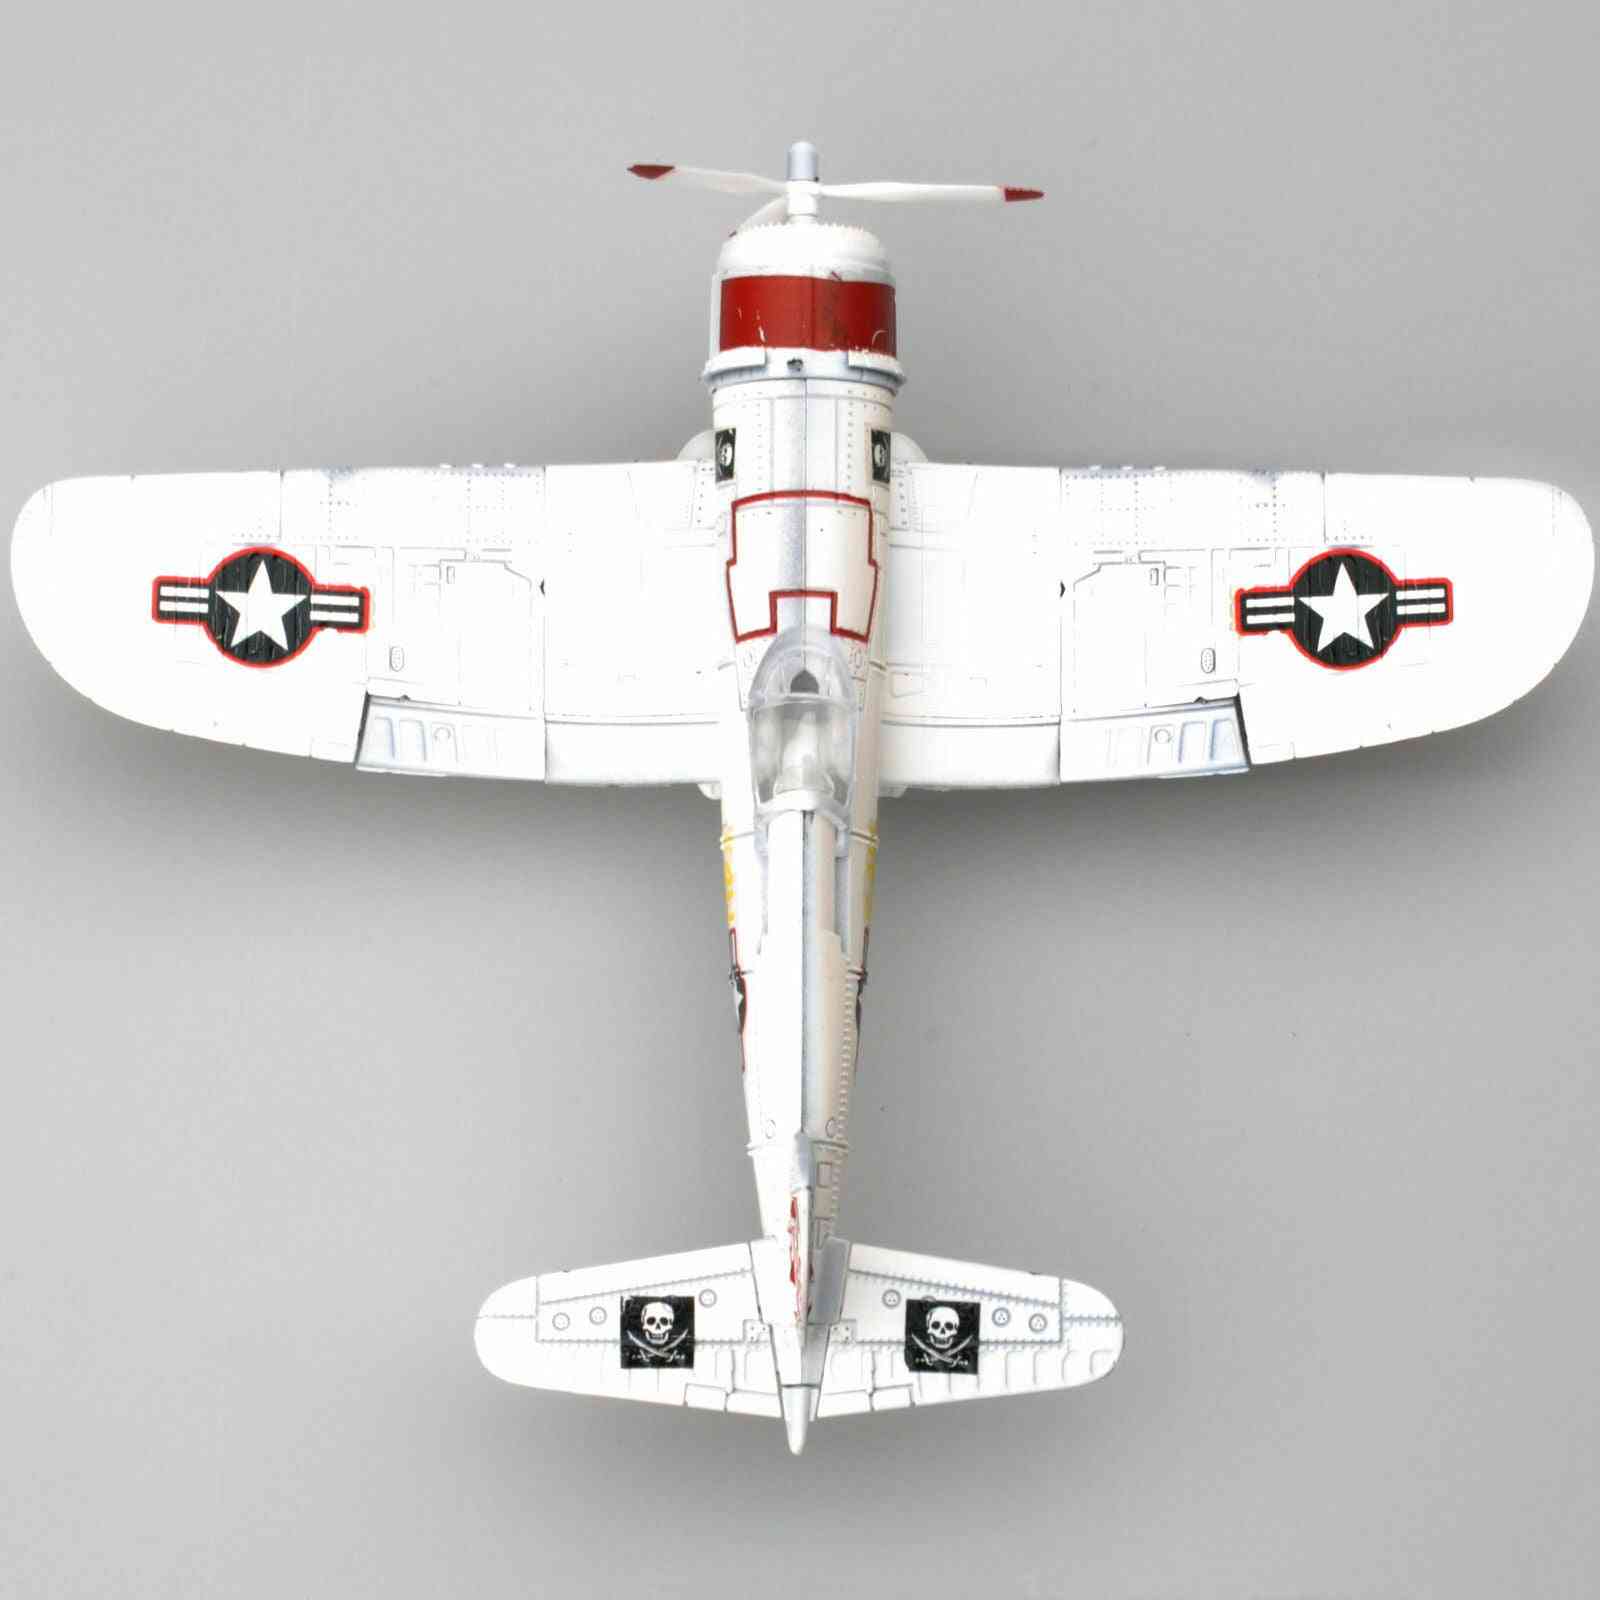 1/48 skala verdenskrig us marinen f4u corsair jagerfly plast fly fly montering modell fly tilfeldig farge